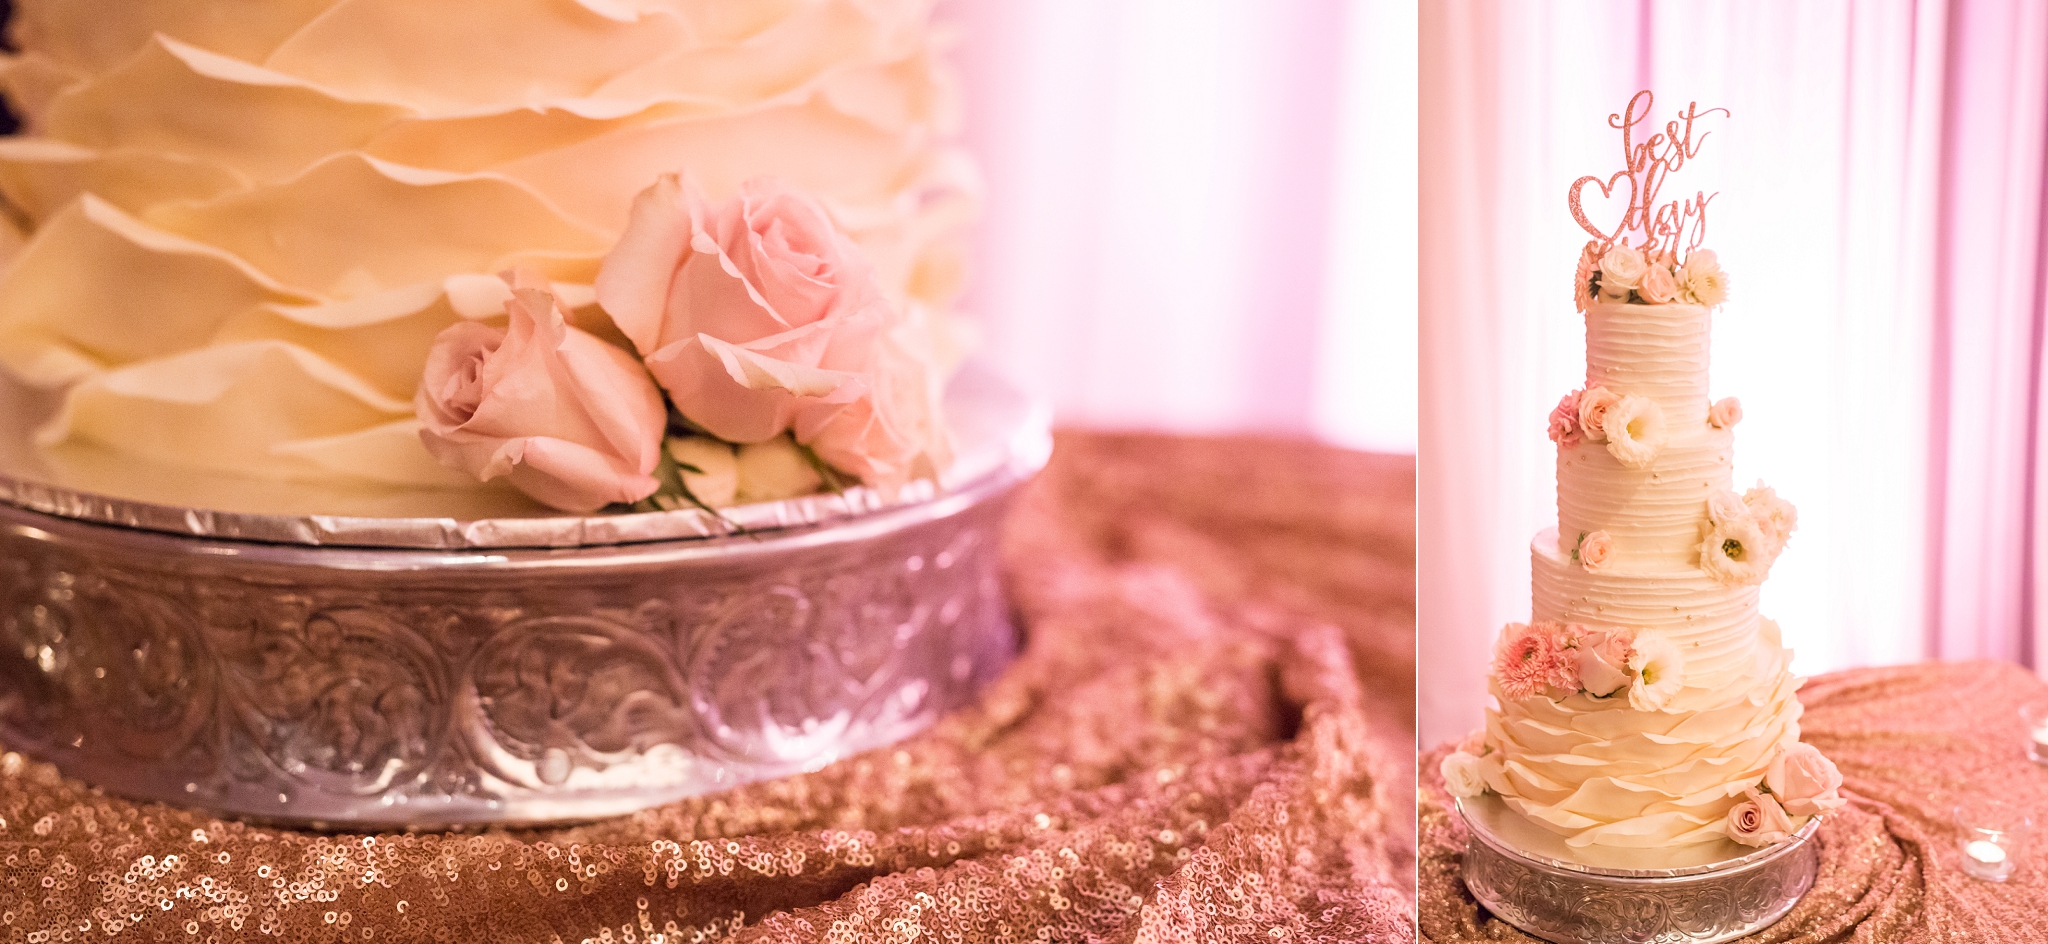 matrix hotel edmonton wedding photos blush and gold wedding decor the art of cake